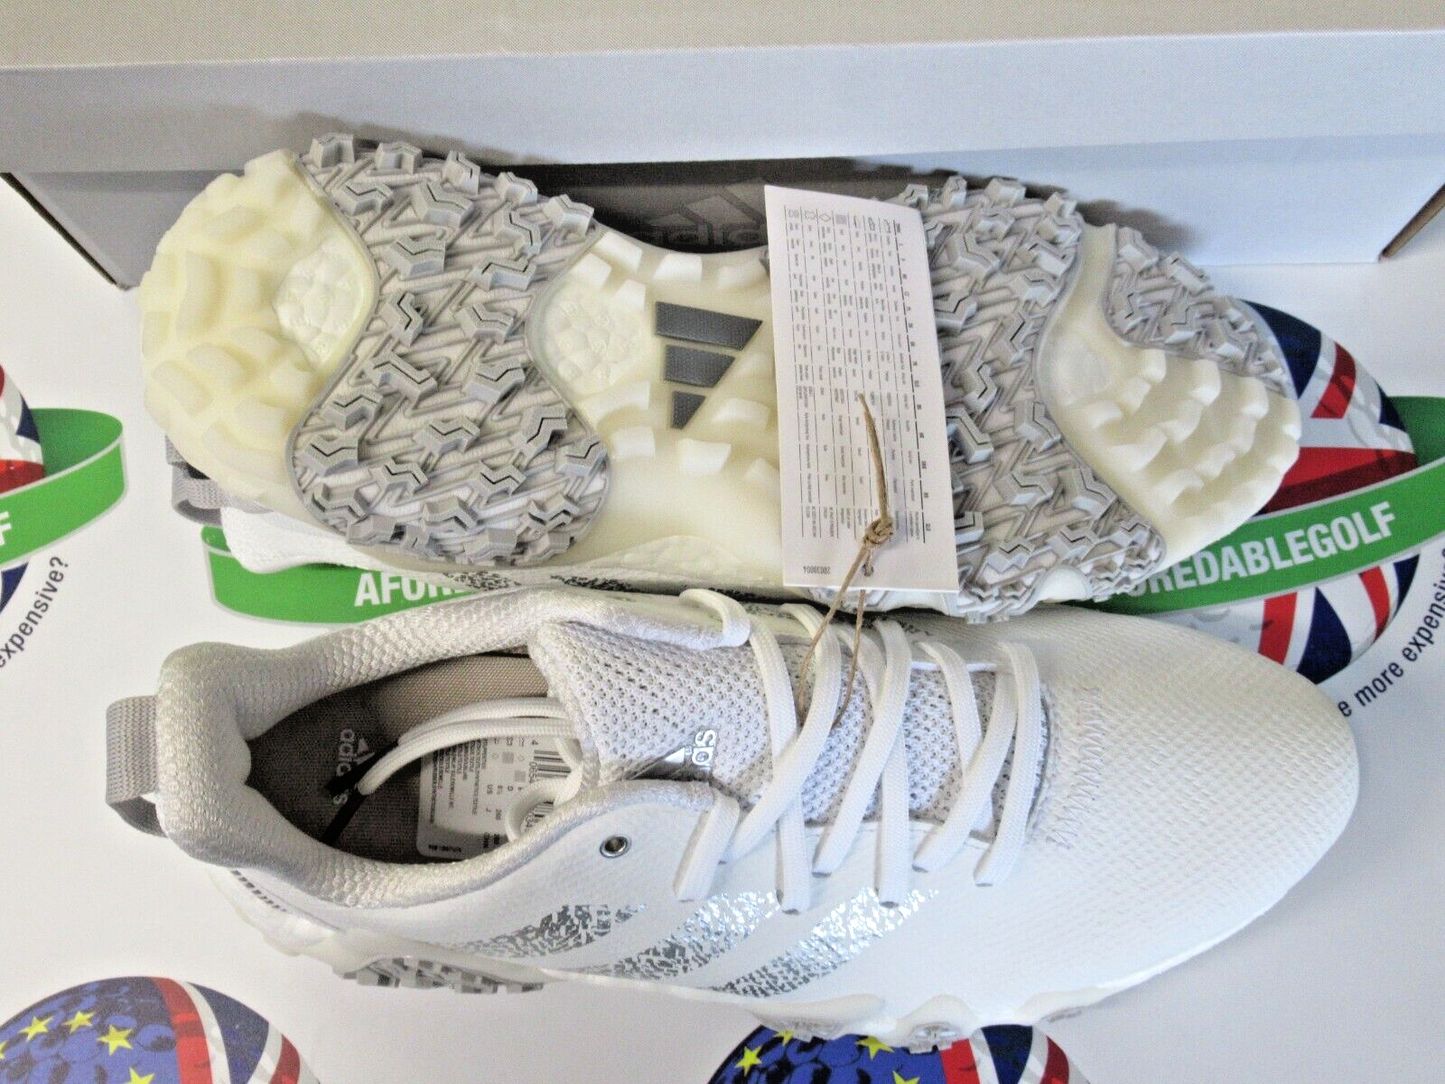 adidas code chaos 22 waterproof golf shoes white/grey/silver uk size 9.5 medium